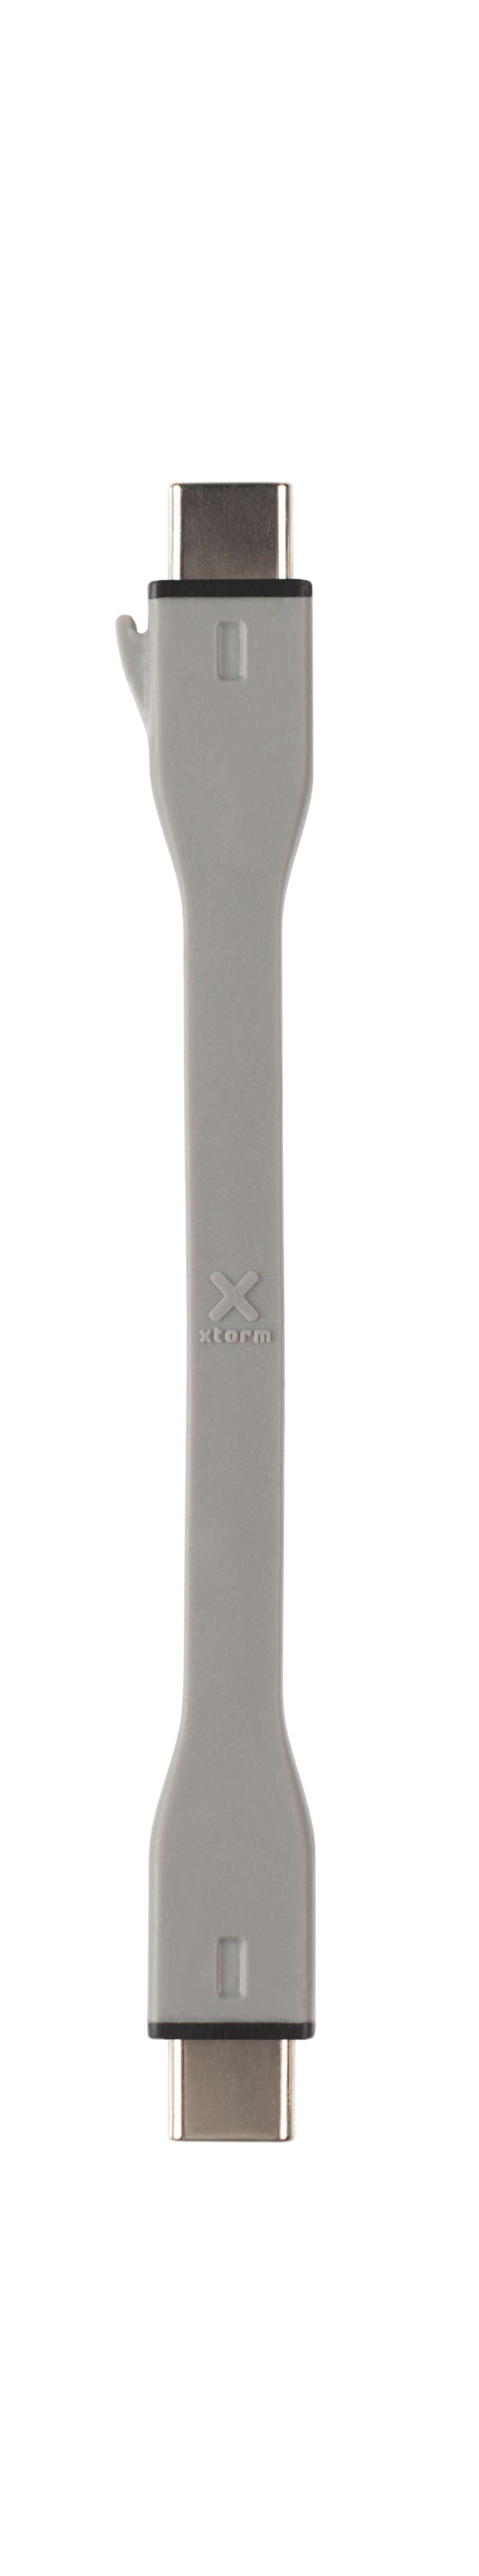 XB Replacement Kurzes USB-C Power Delivery Kabel - Grau